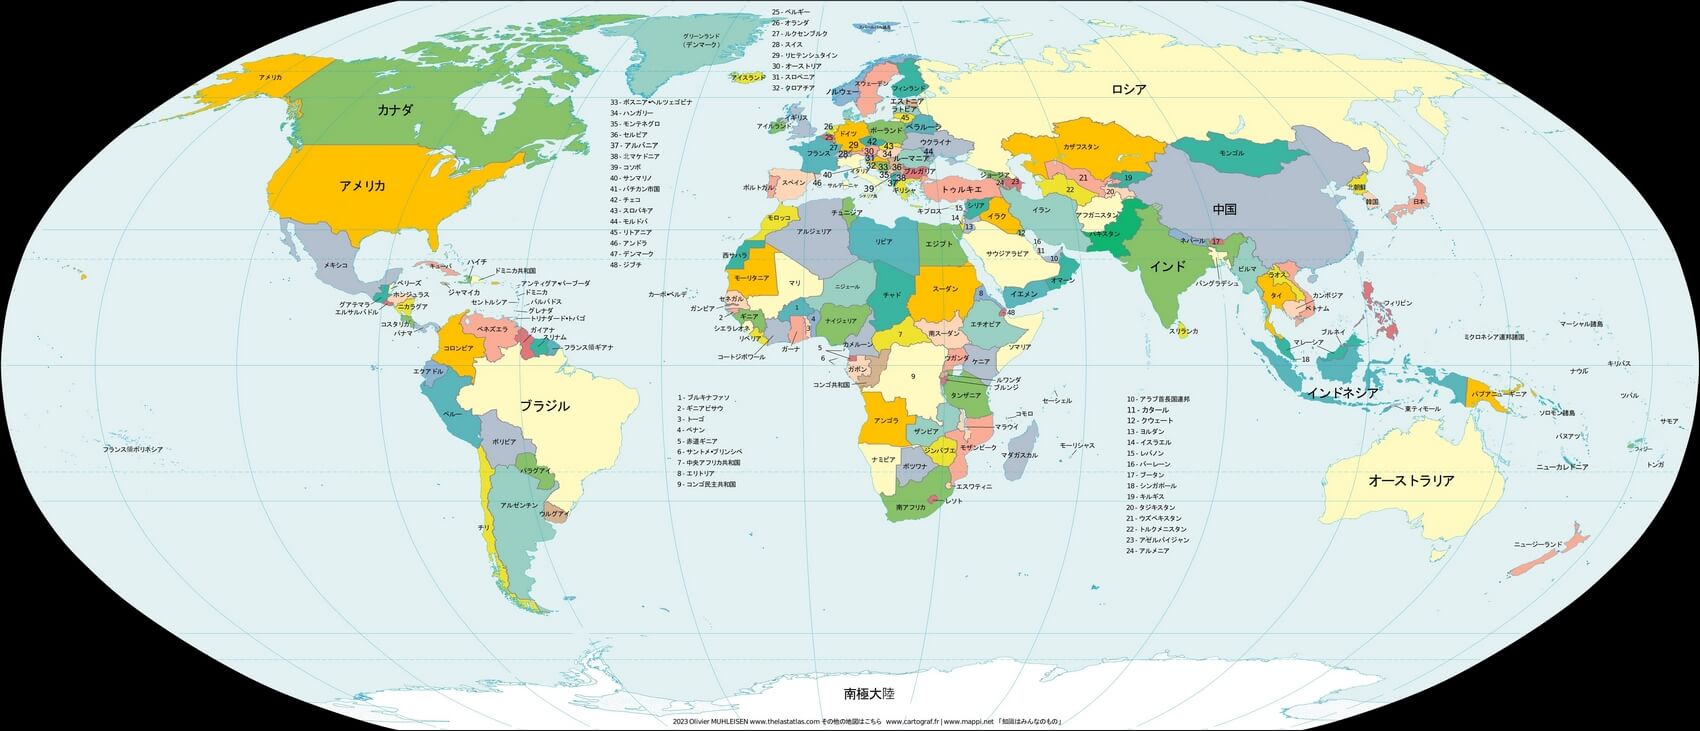 Mapa mundi com países em japonês